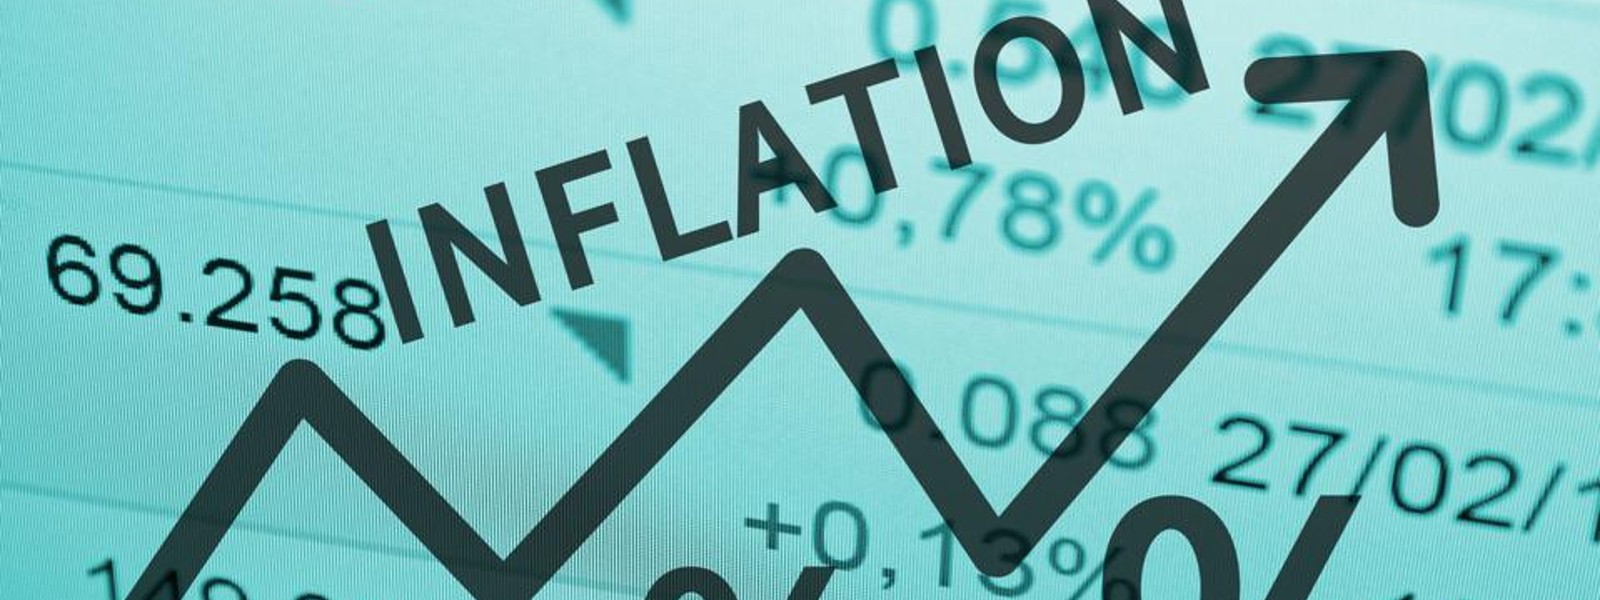 Sri Lanka Inflation hits 66.7%